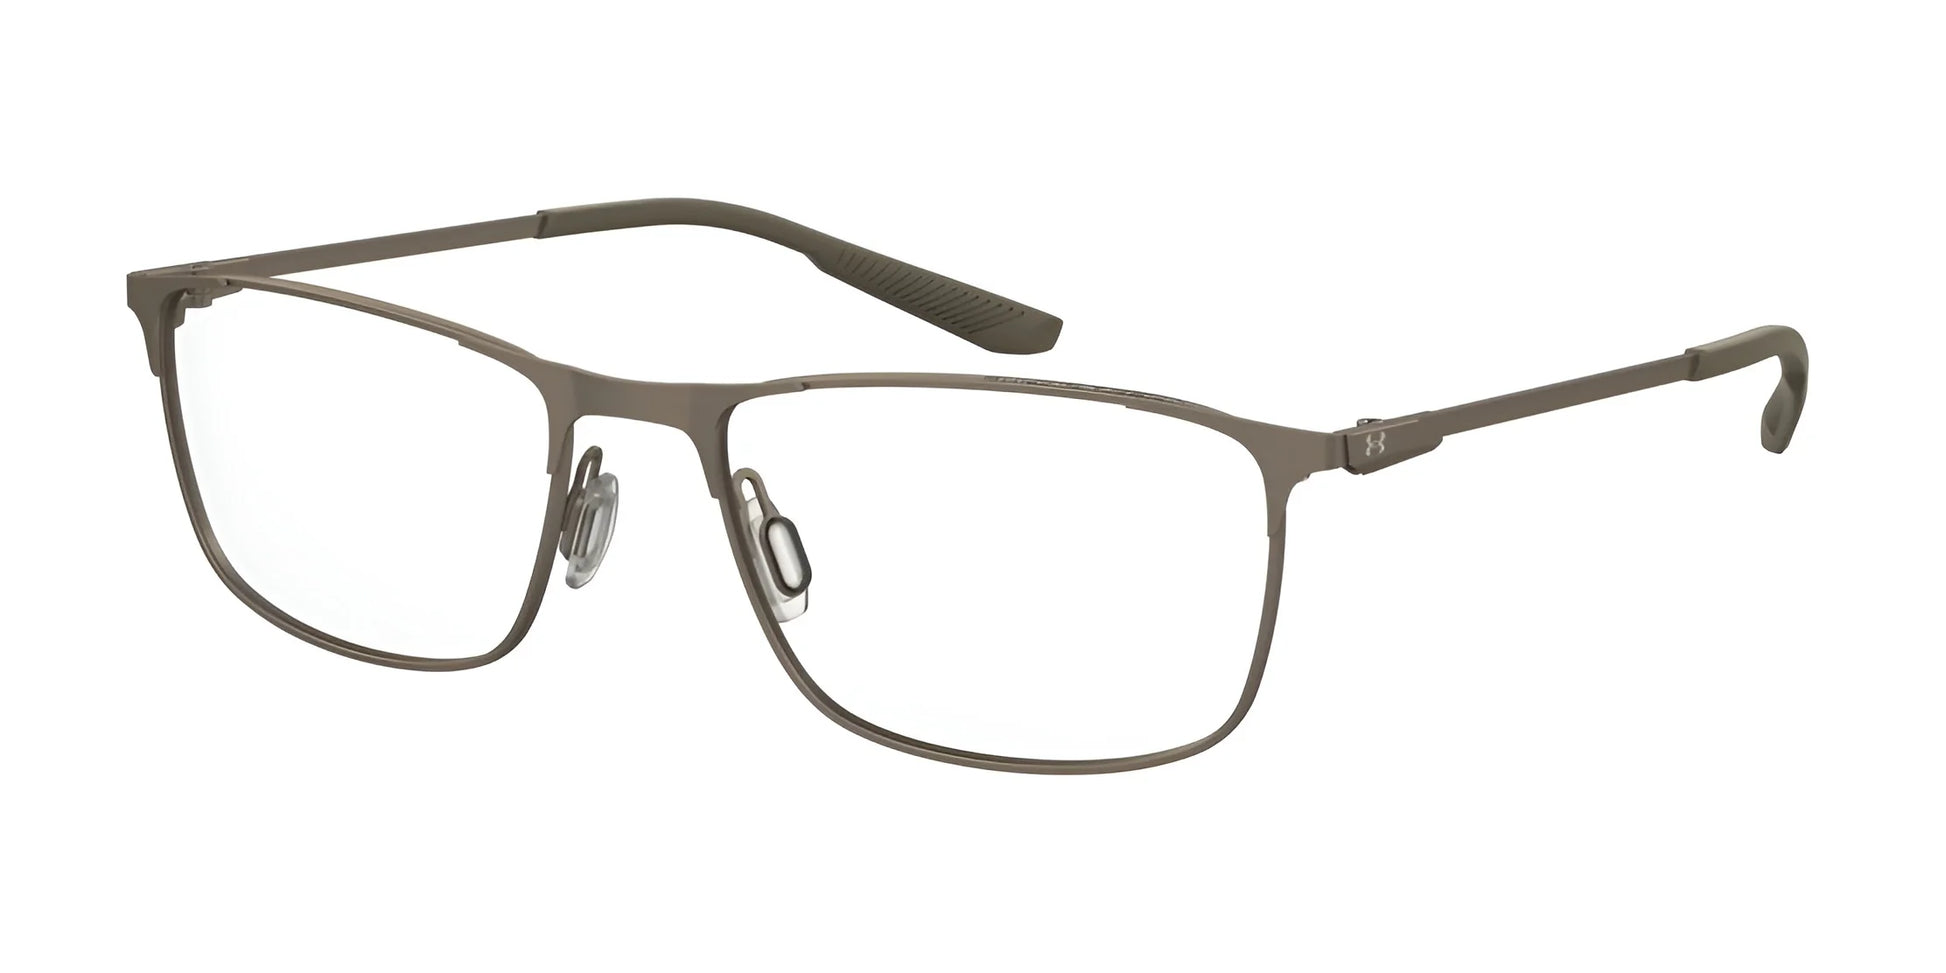 Under Armour 5015 Eyeglasses Greybrown